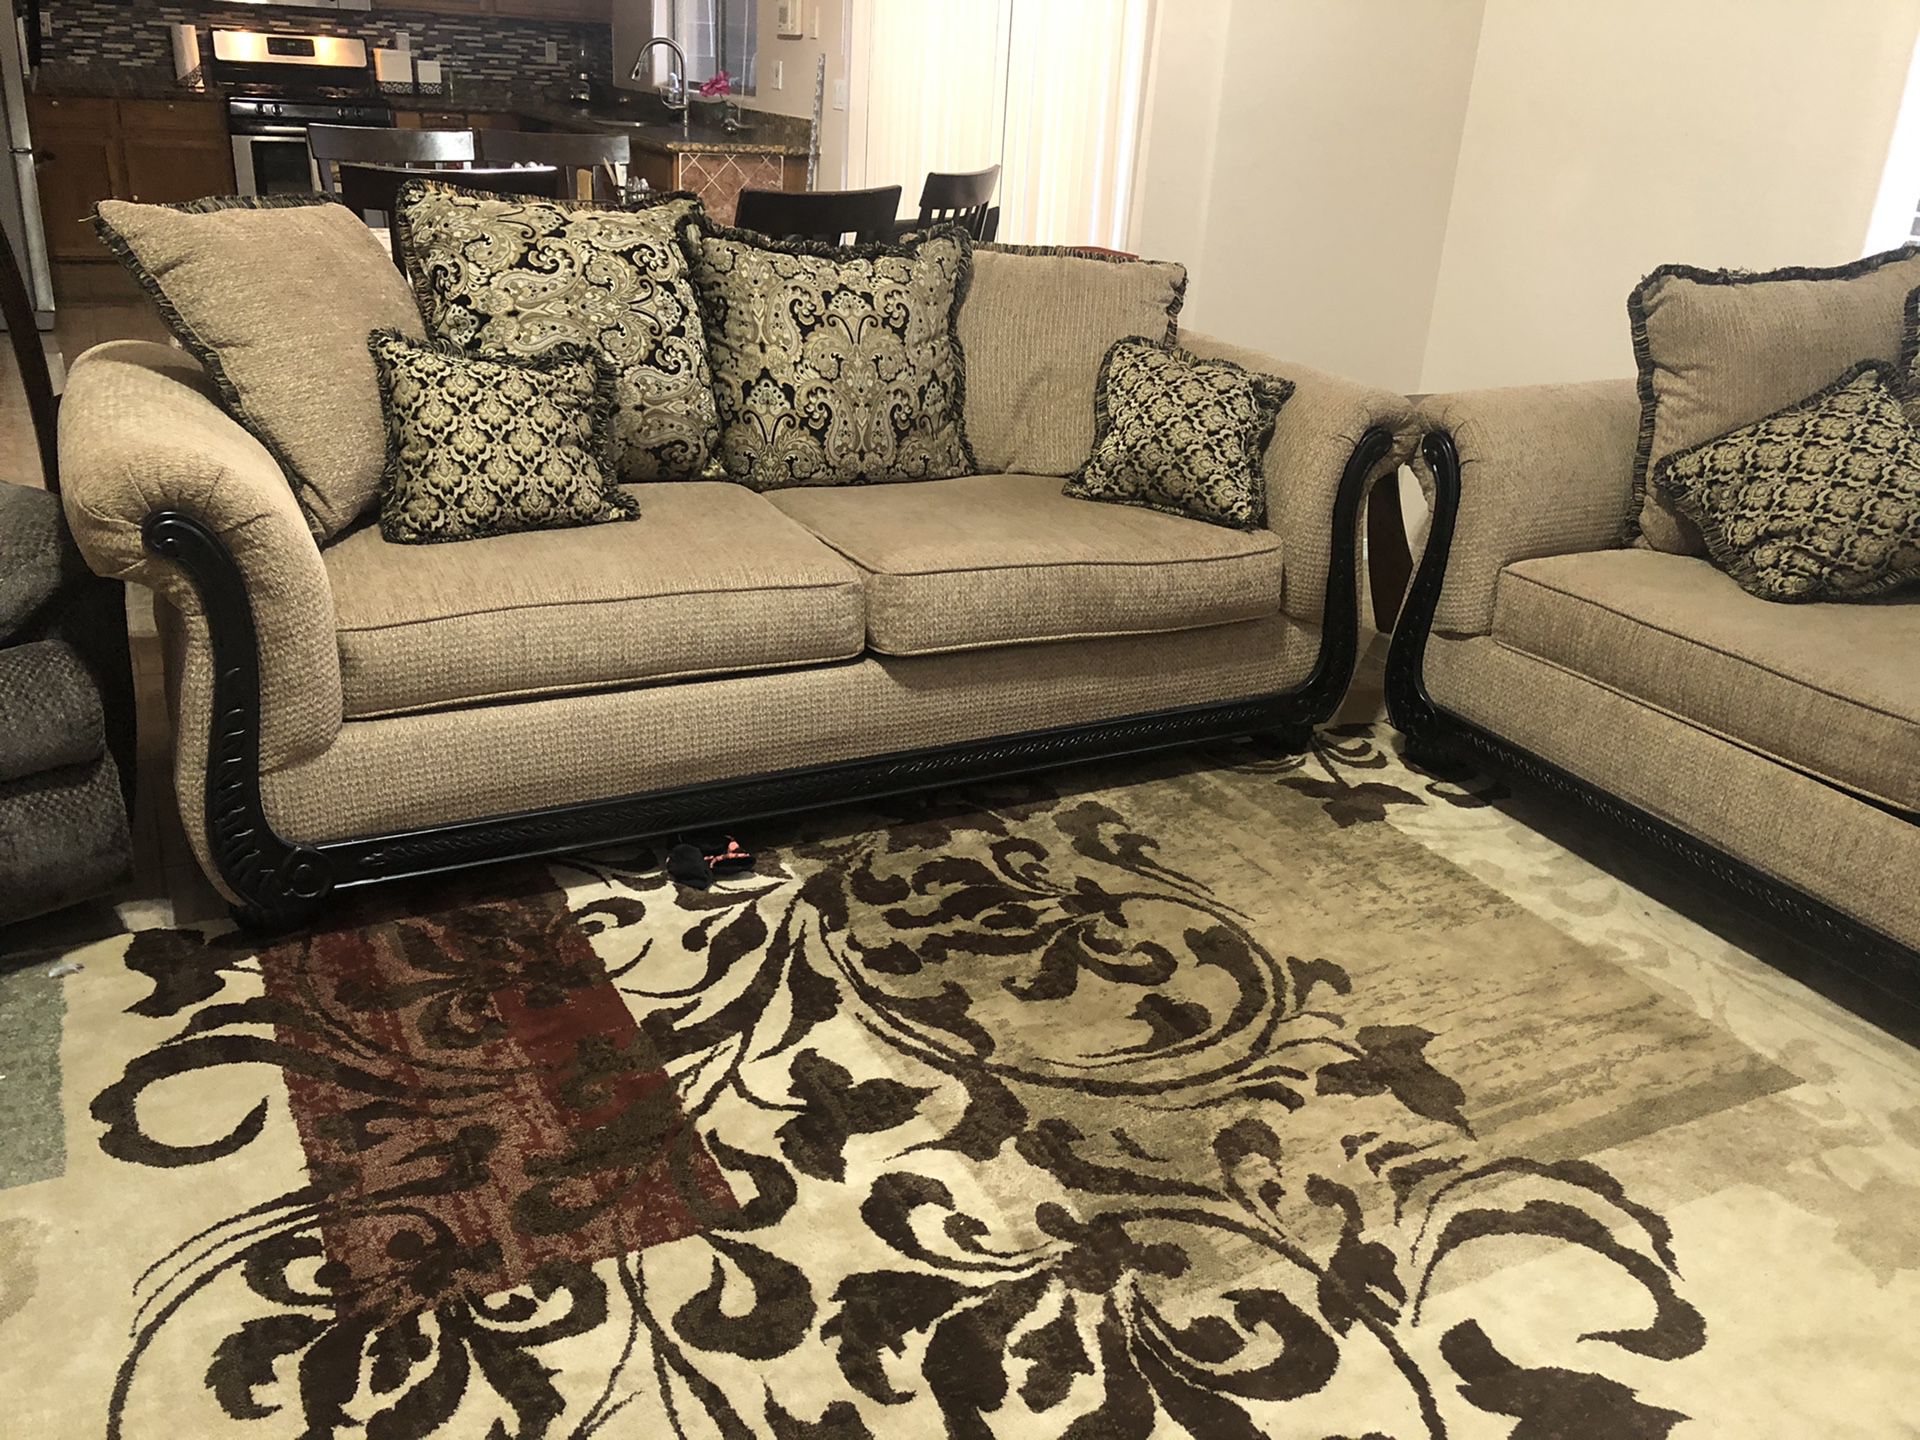 Two sofa sets